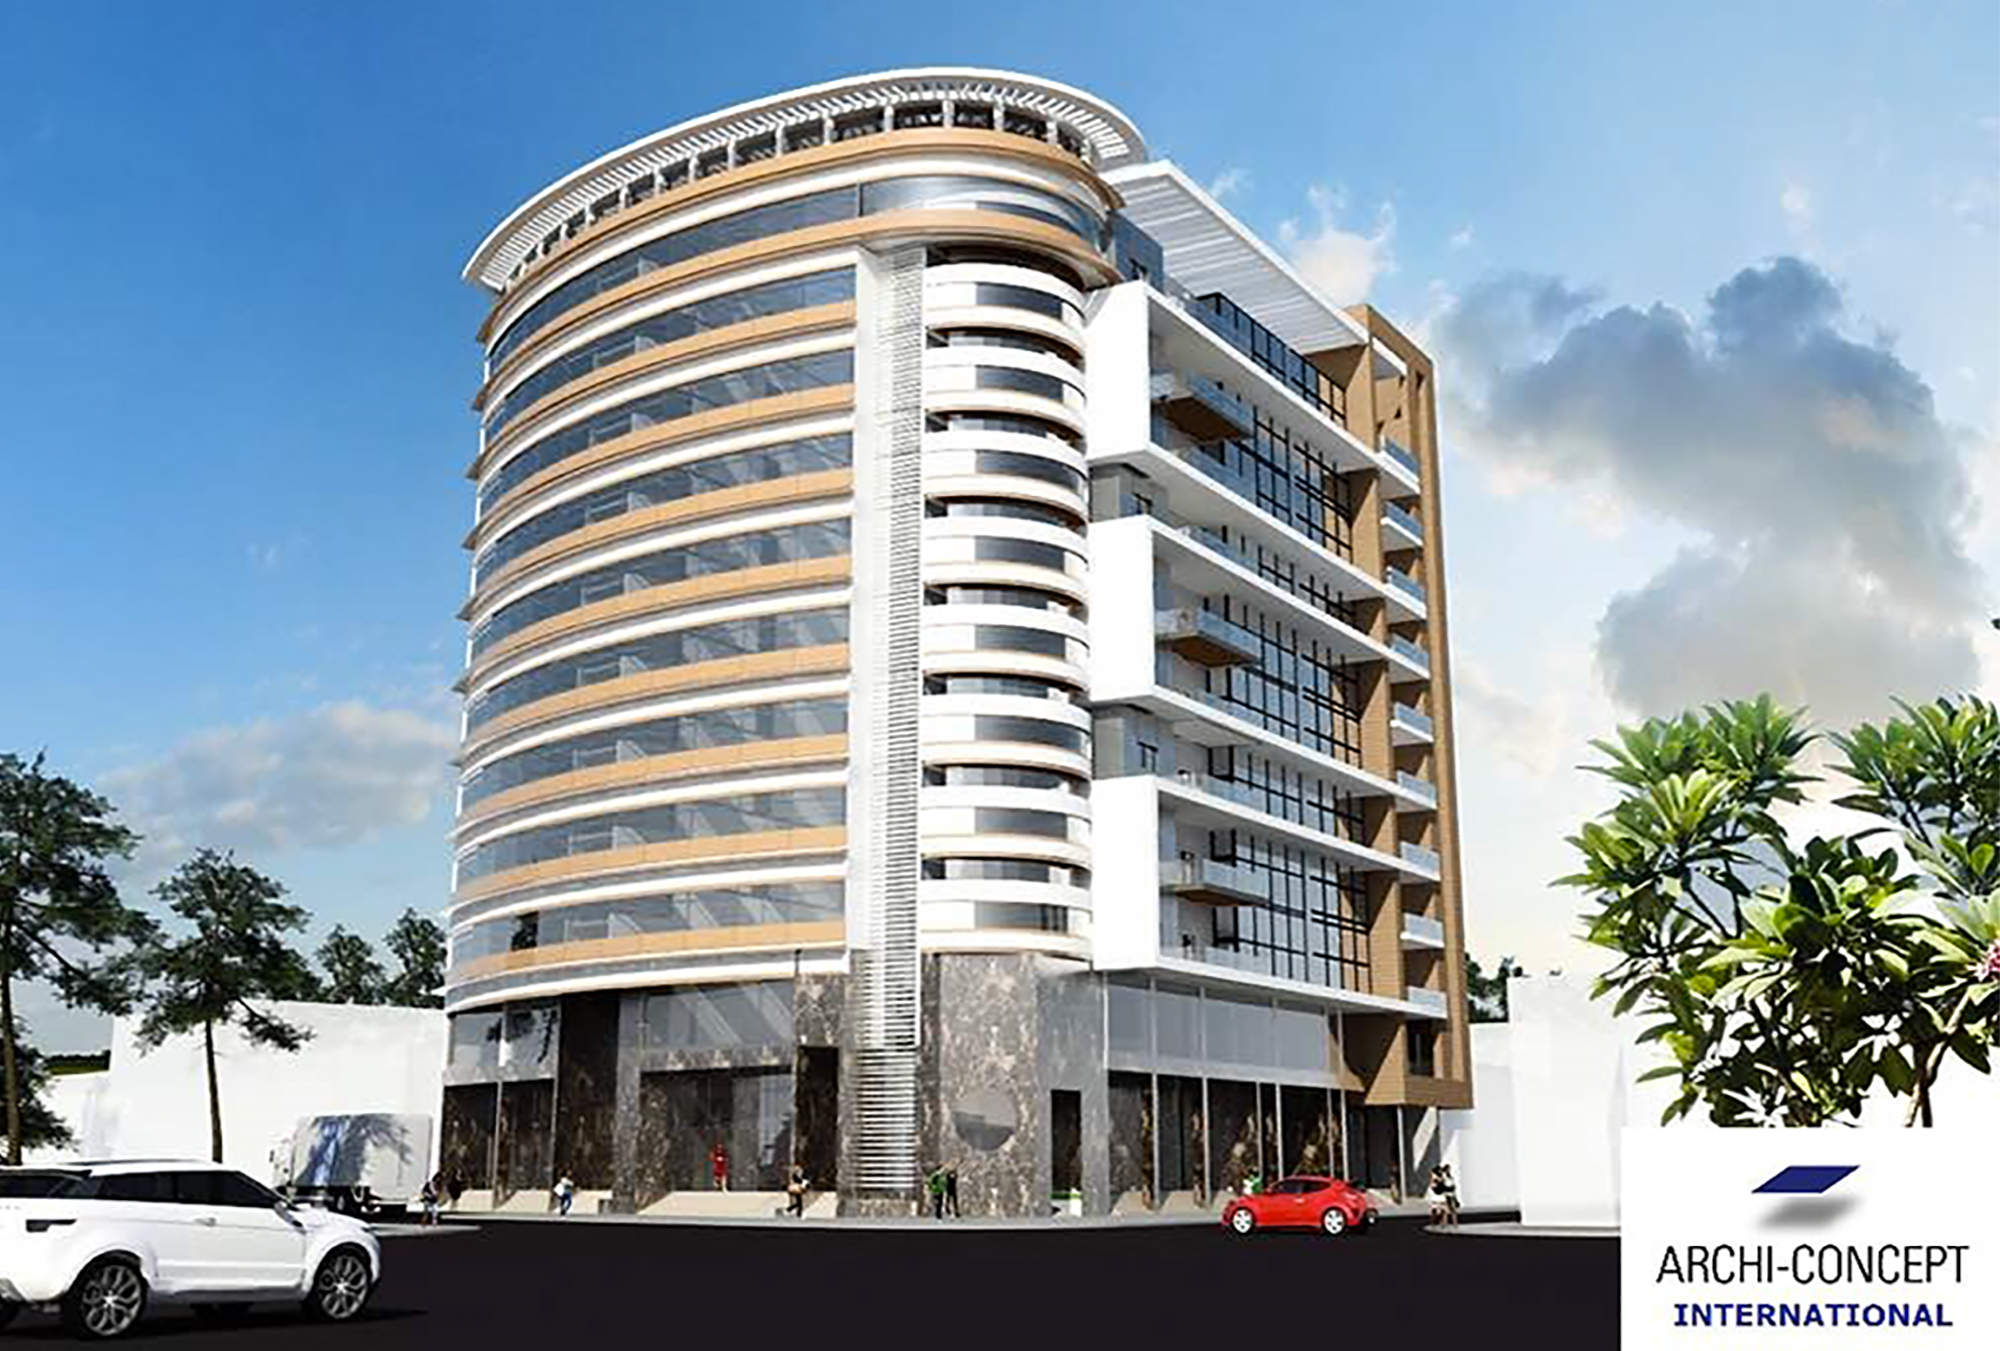 Immeuble SARRAULT -Cabinet d'architecture, Malick Mbow - Archi Concept International - Dakar, Sénégal